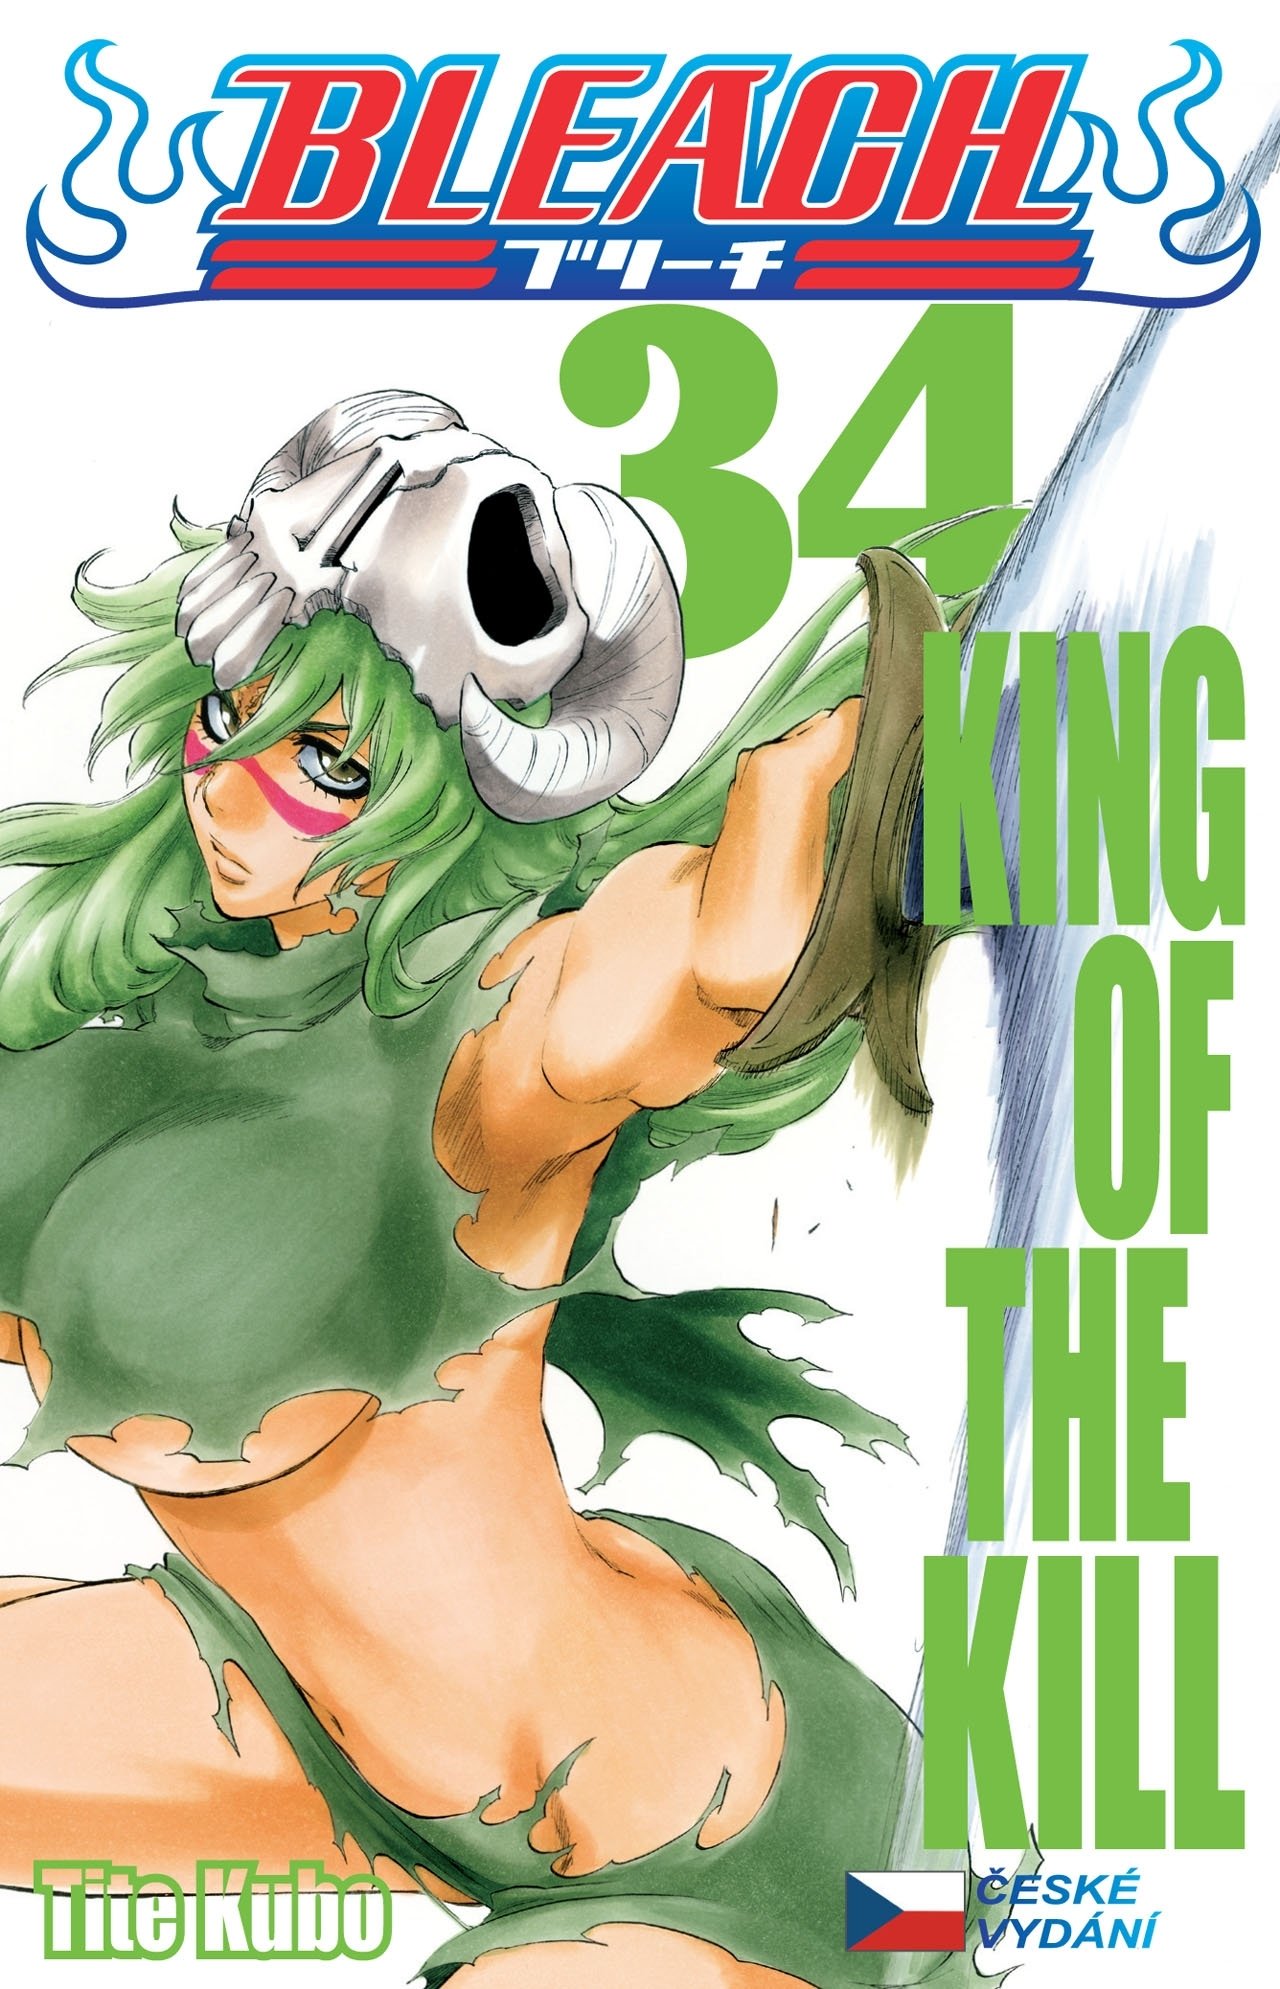 Bleach 34: King of the Kill - Noriaki Kubo